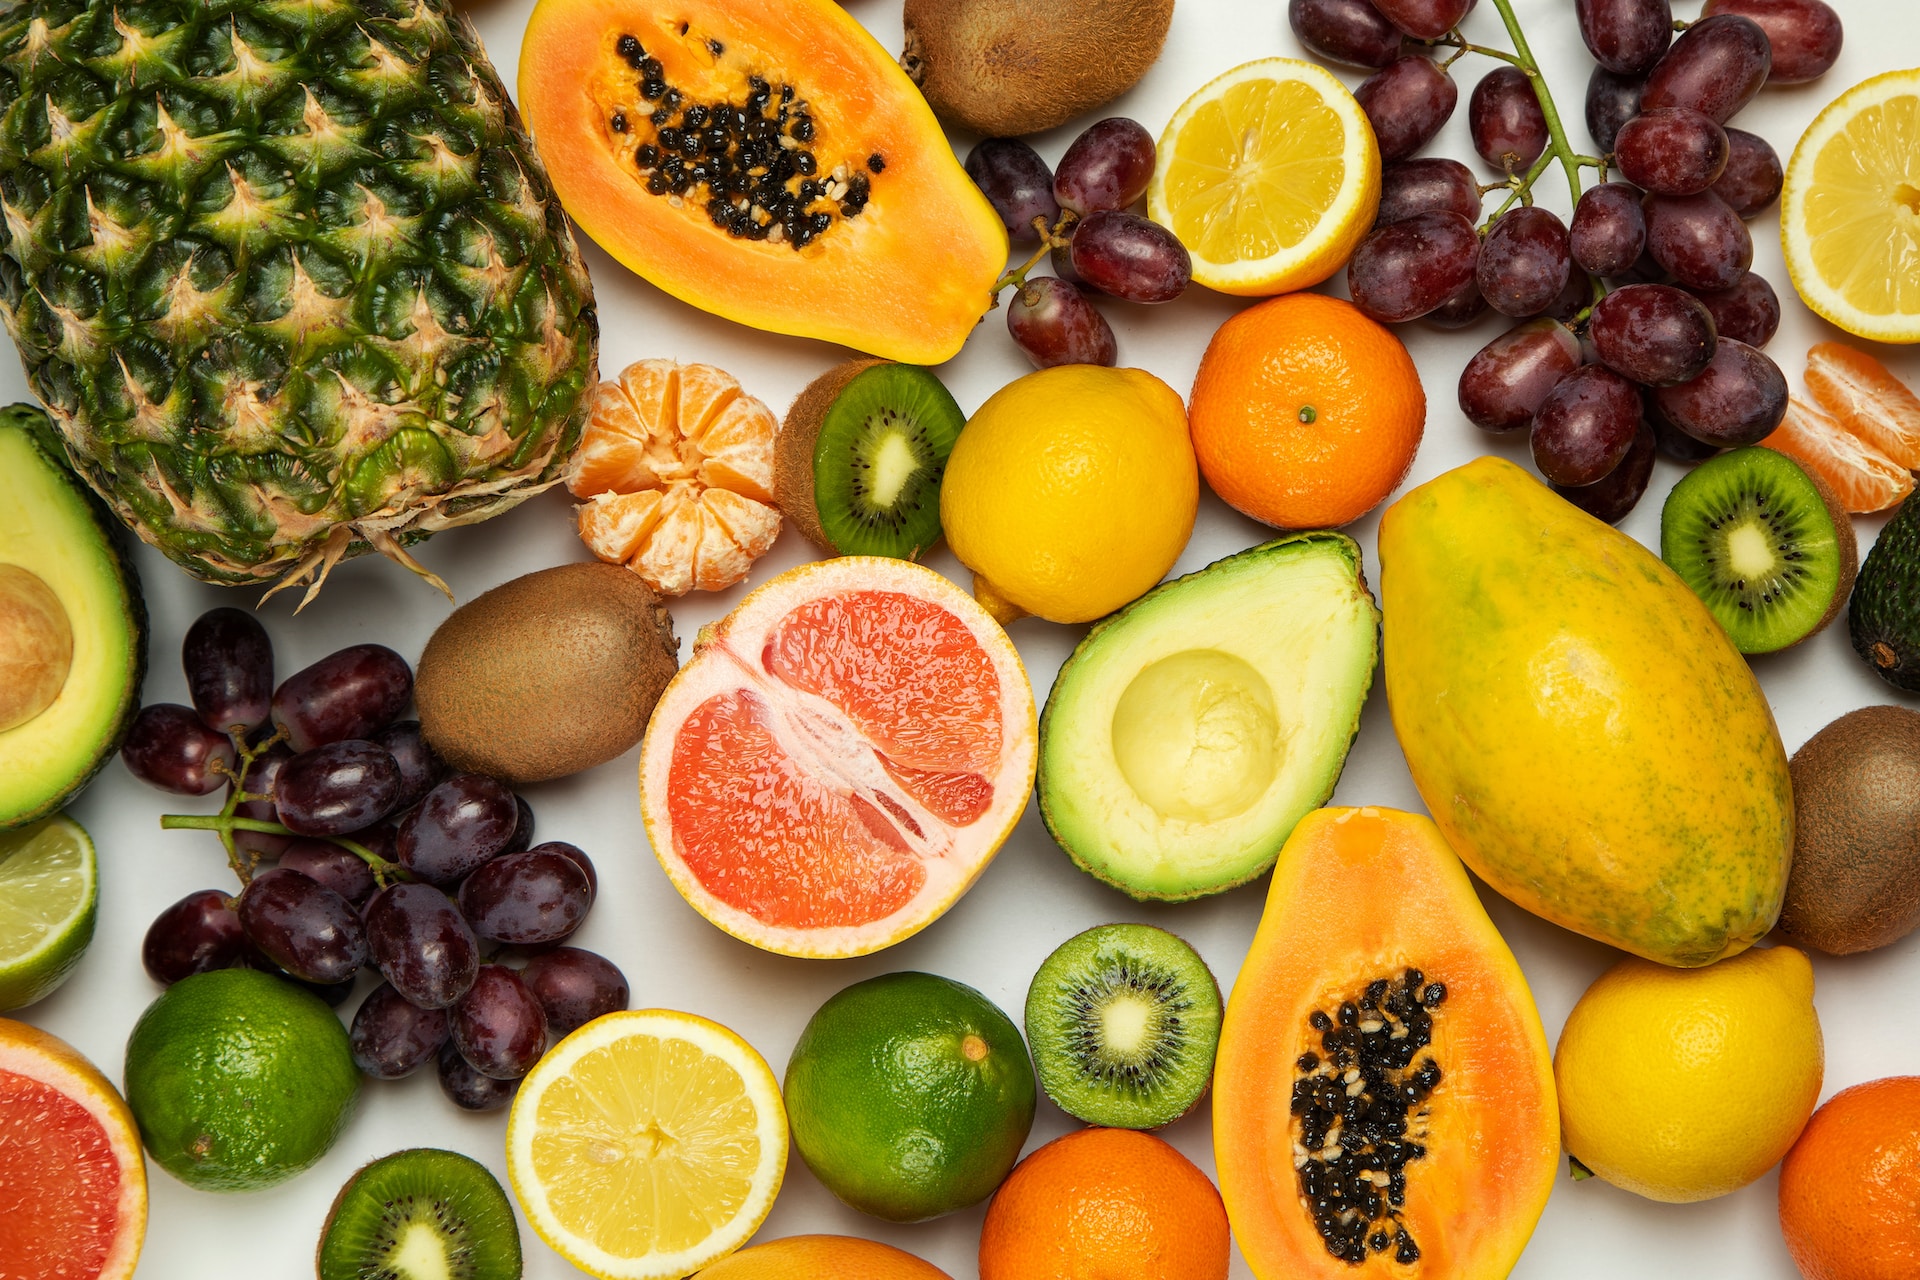 Healthiest Fruits